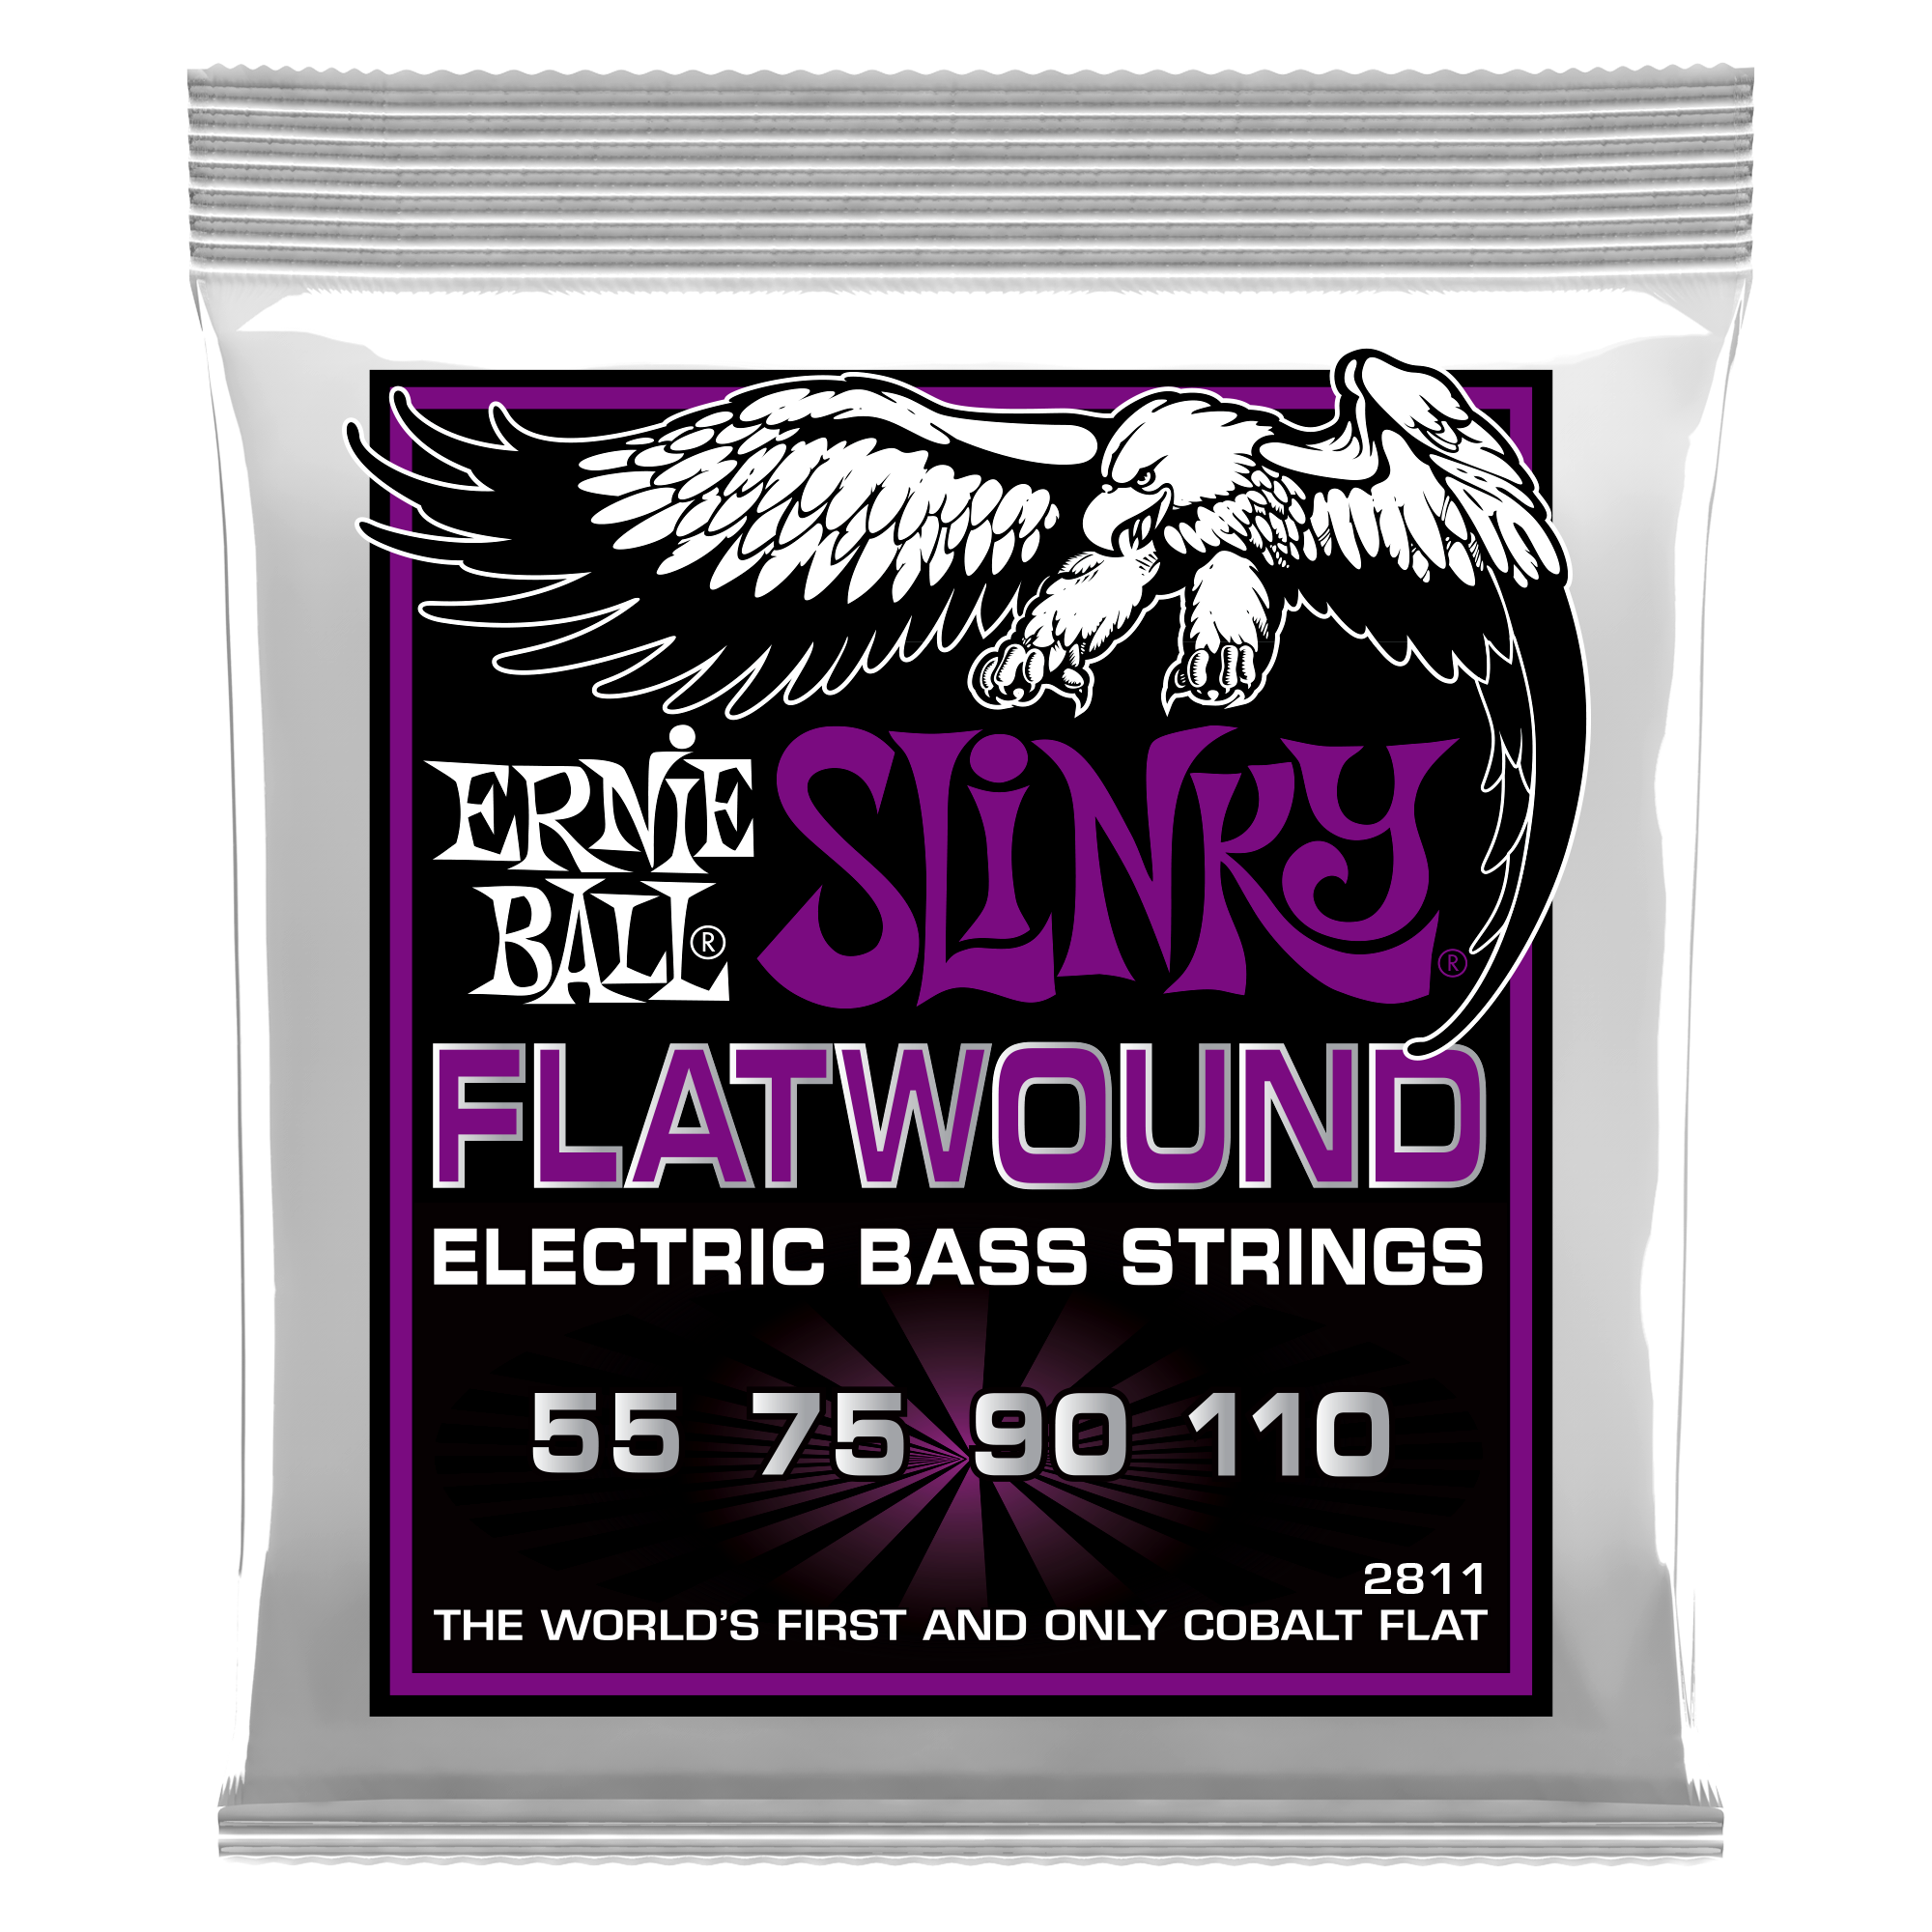 Ernie Ball Slinky Flatwound Bass Strings 55 - 110